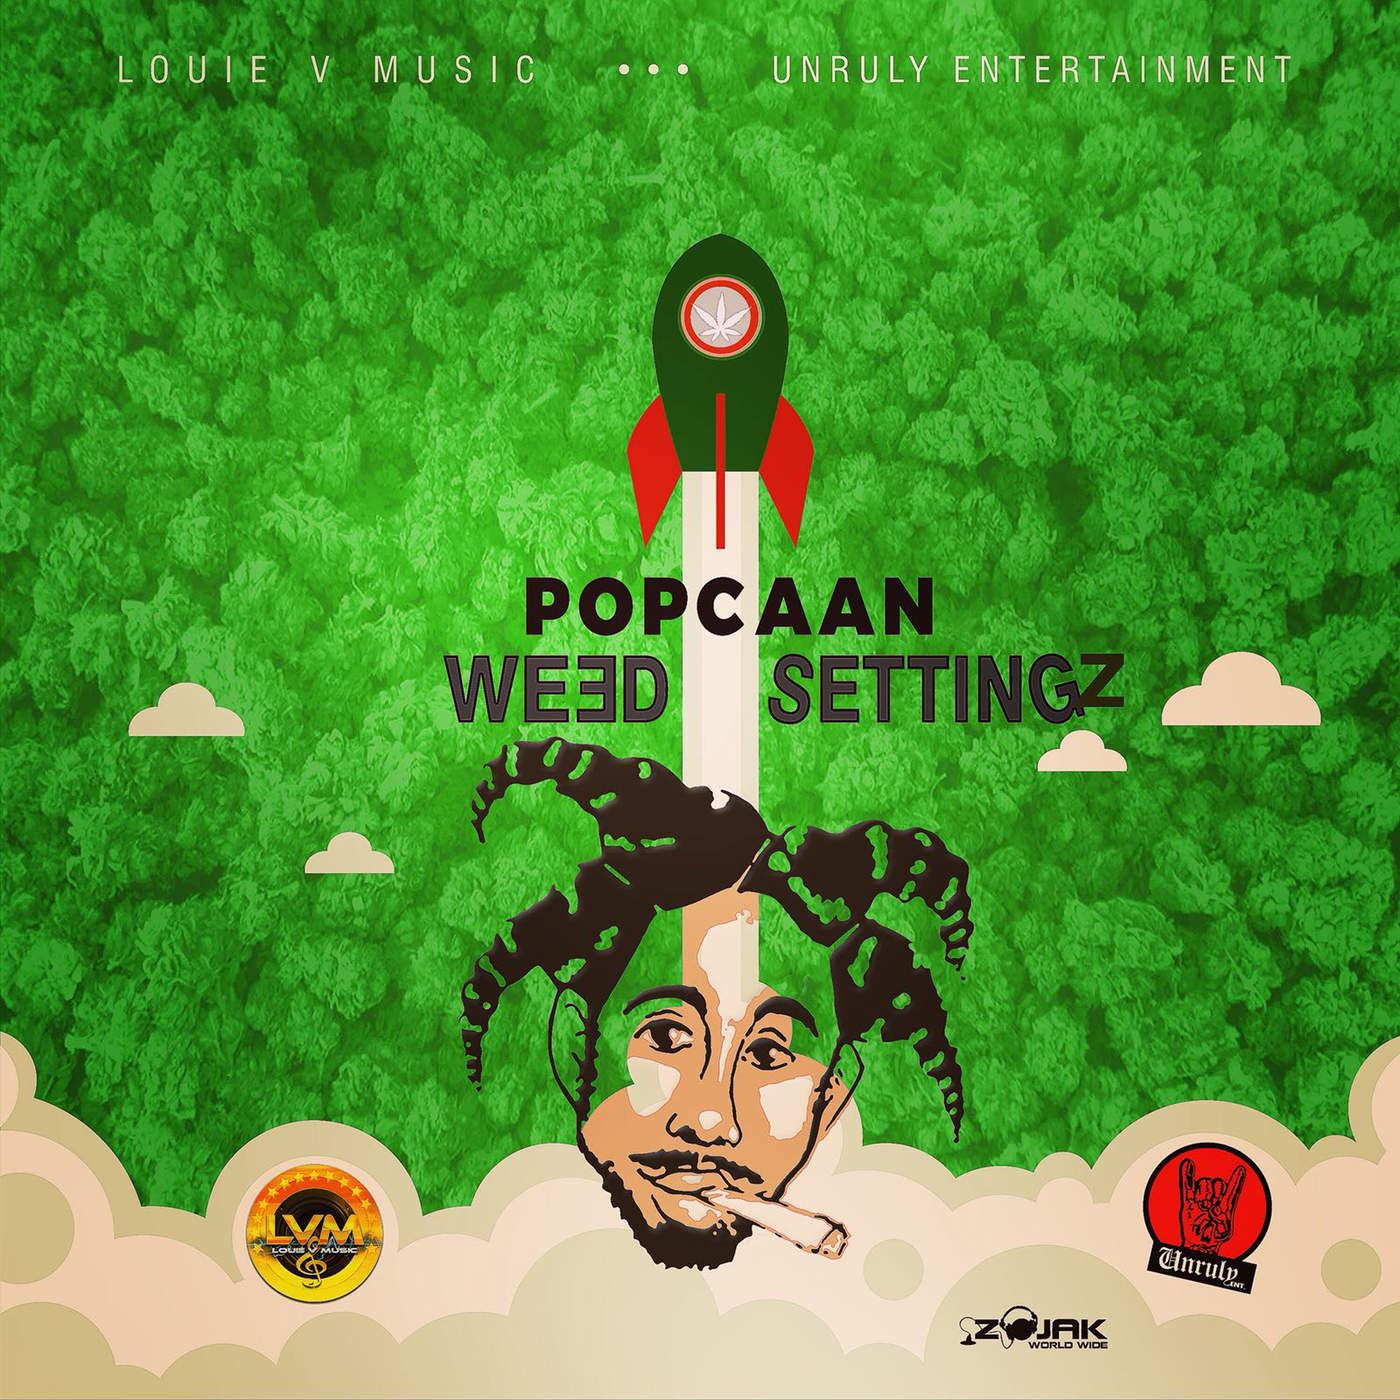 Popcaan - Weed Settingz.mp3